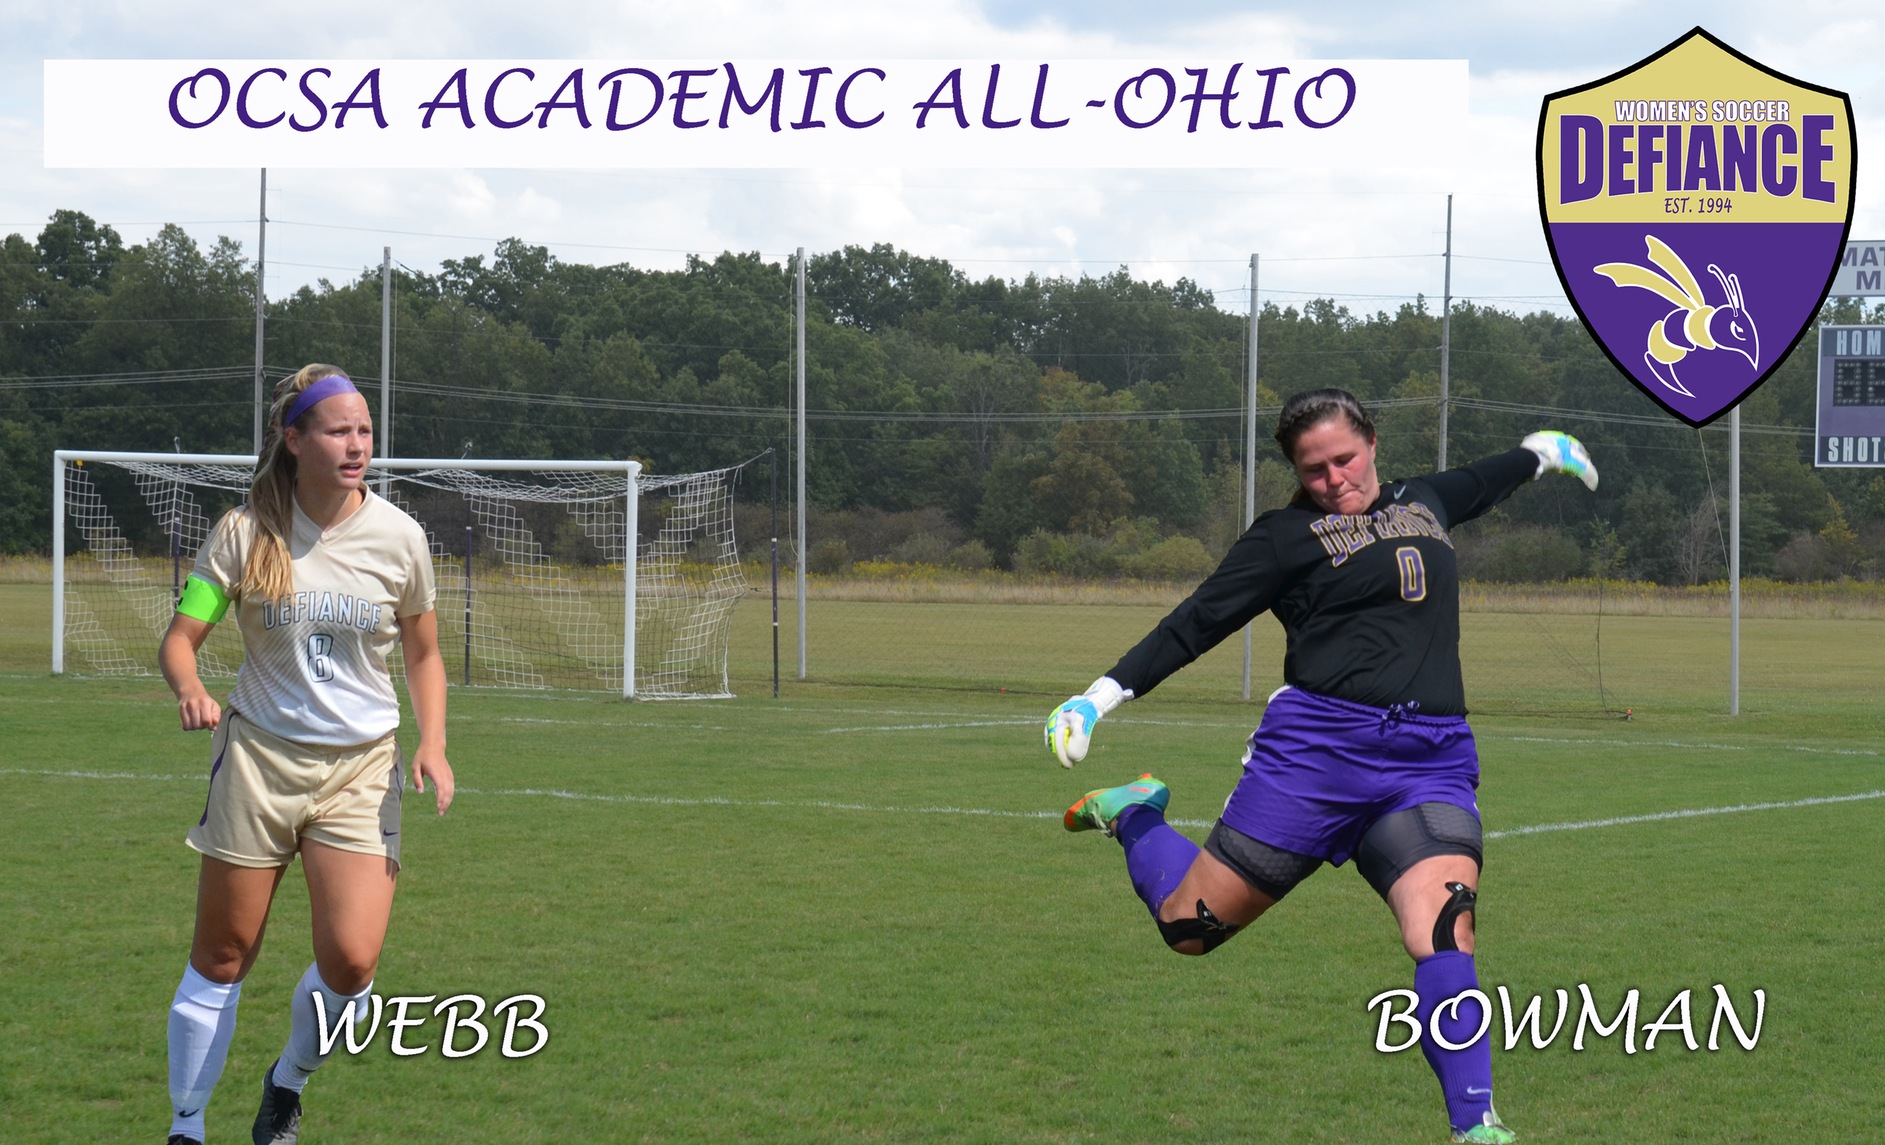 Bowman, Webb Earn OCSA Academic All-Ohio Honors